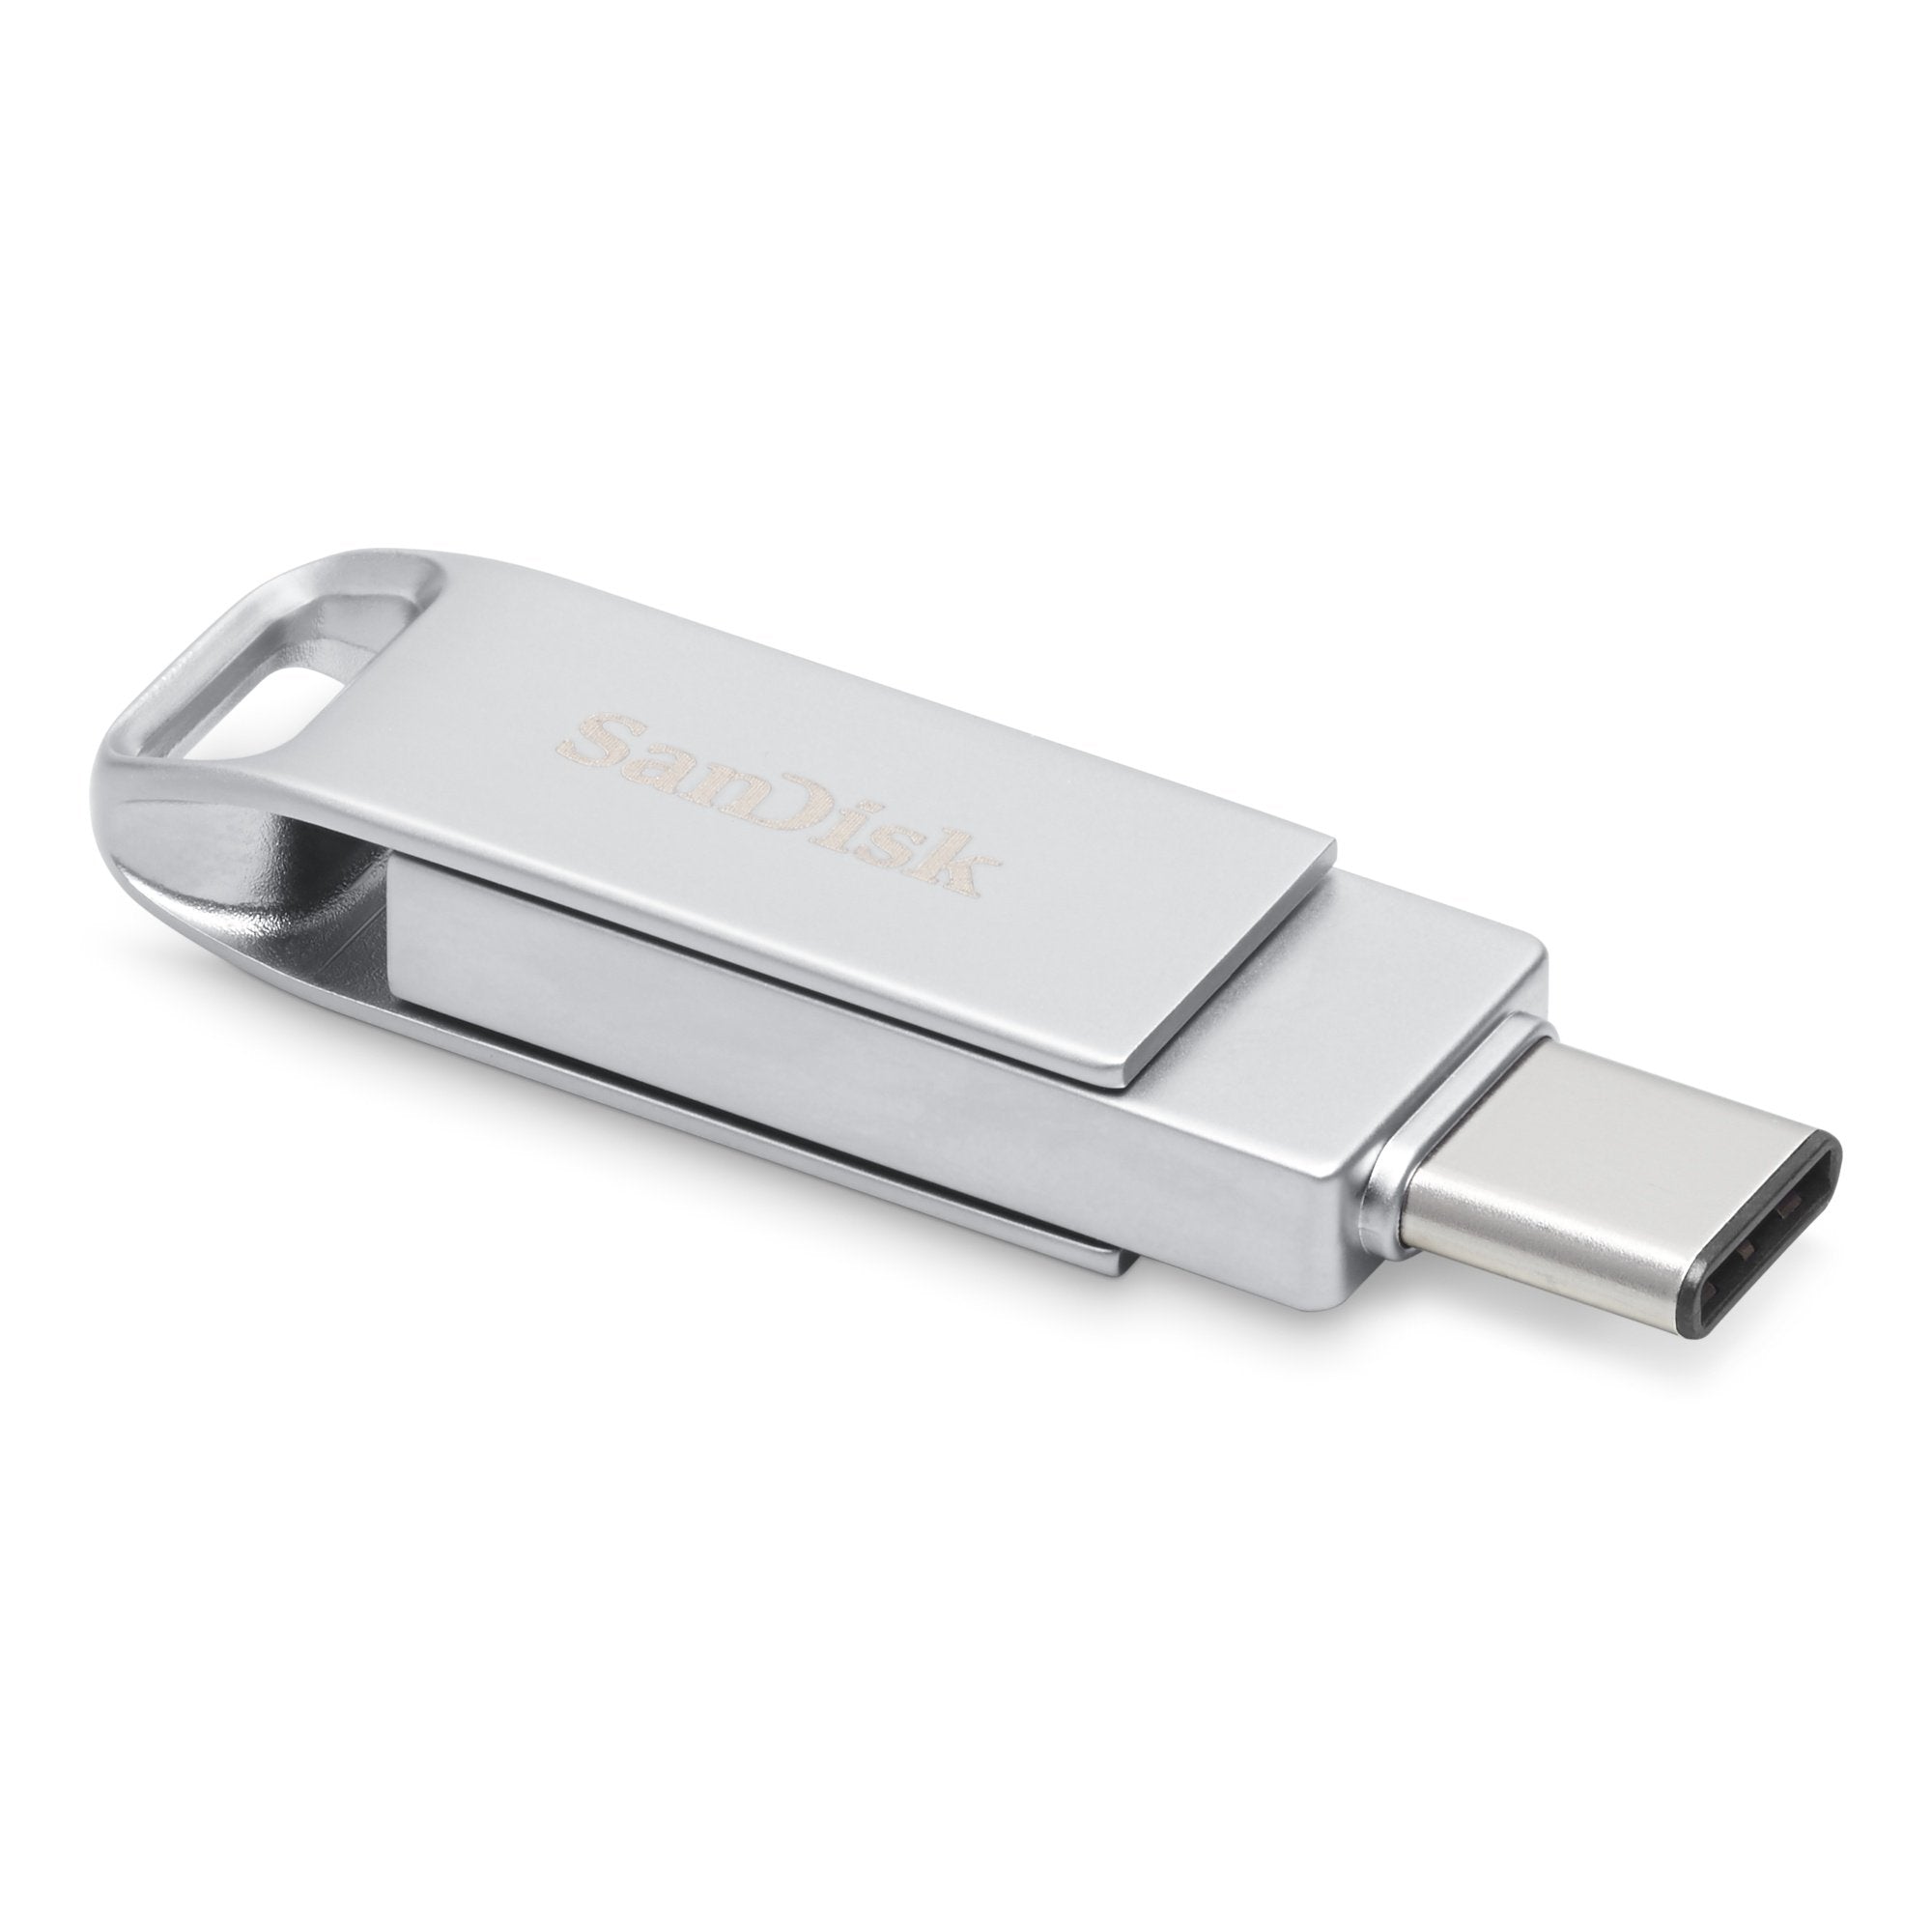 SanDisk SDDDMC2-128G-GA46 128GB Ultra Dual Drive USB C